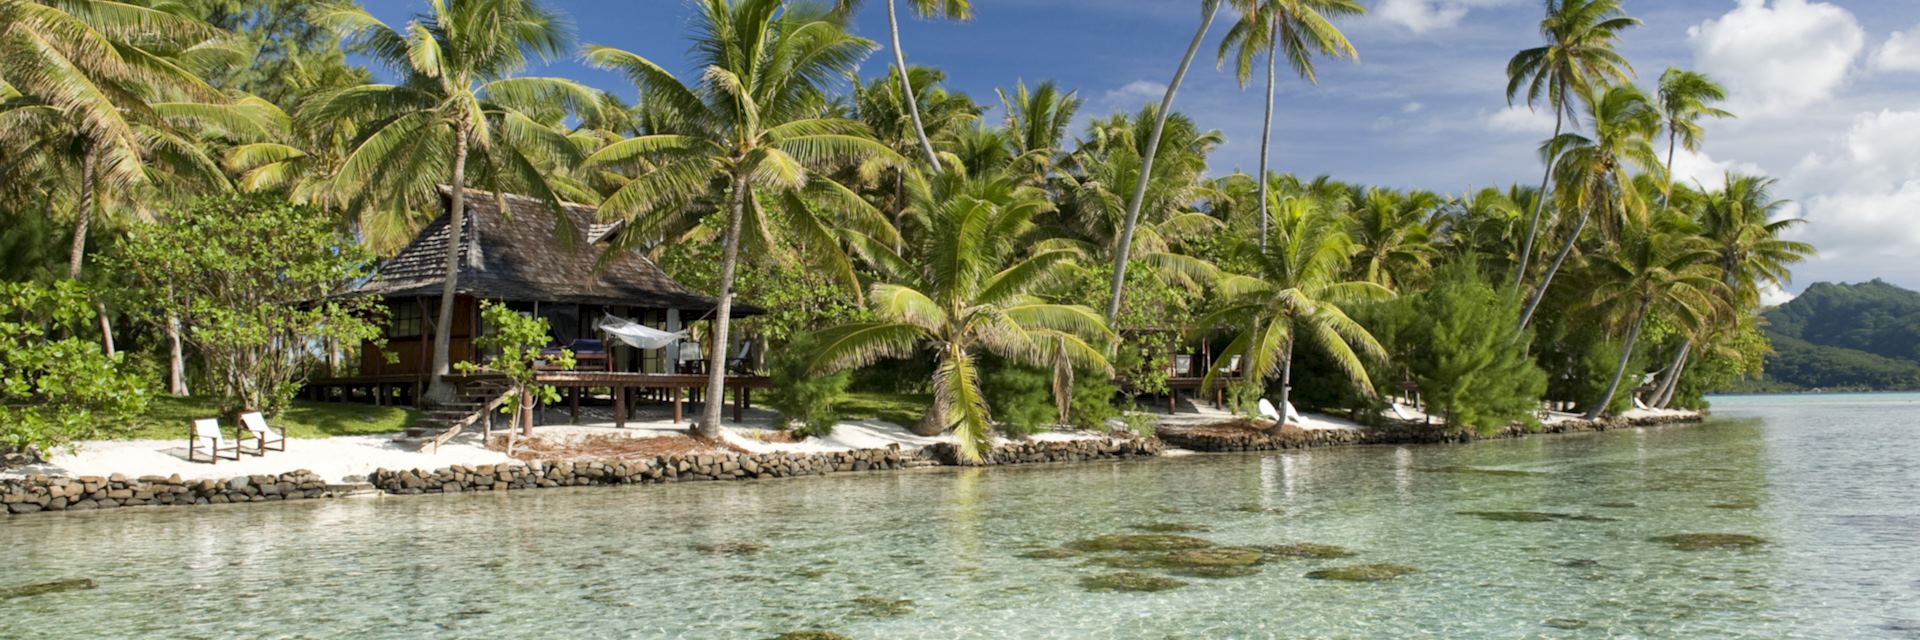 Vahine Island Private Island Resort, French Polynesia